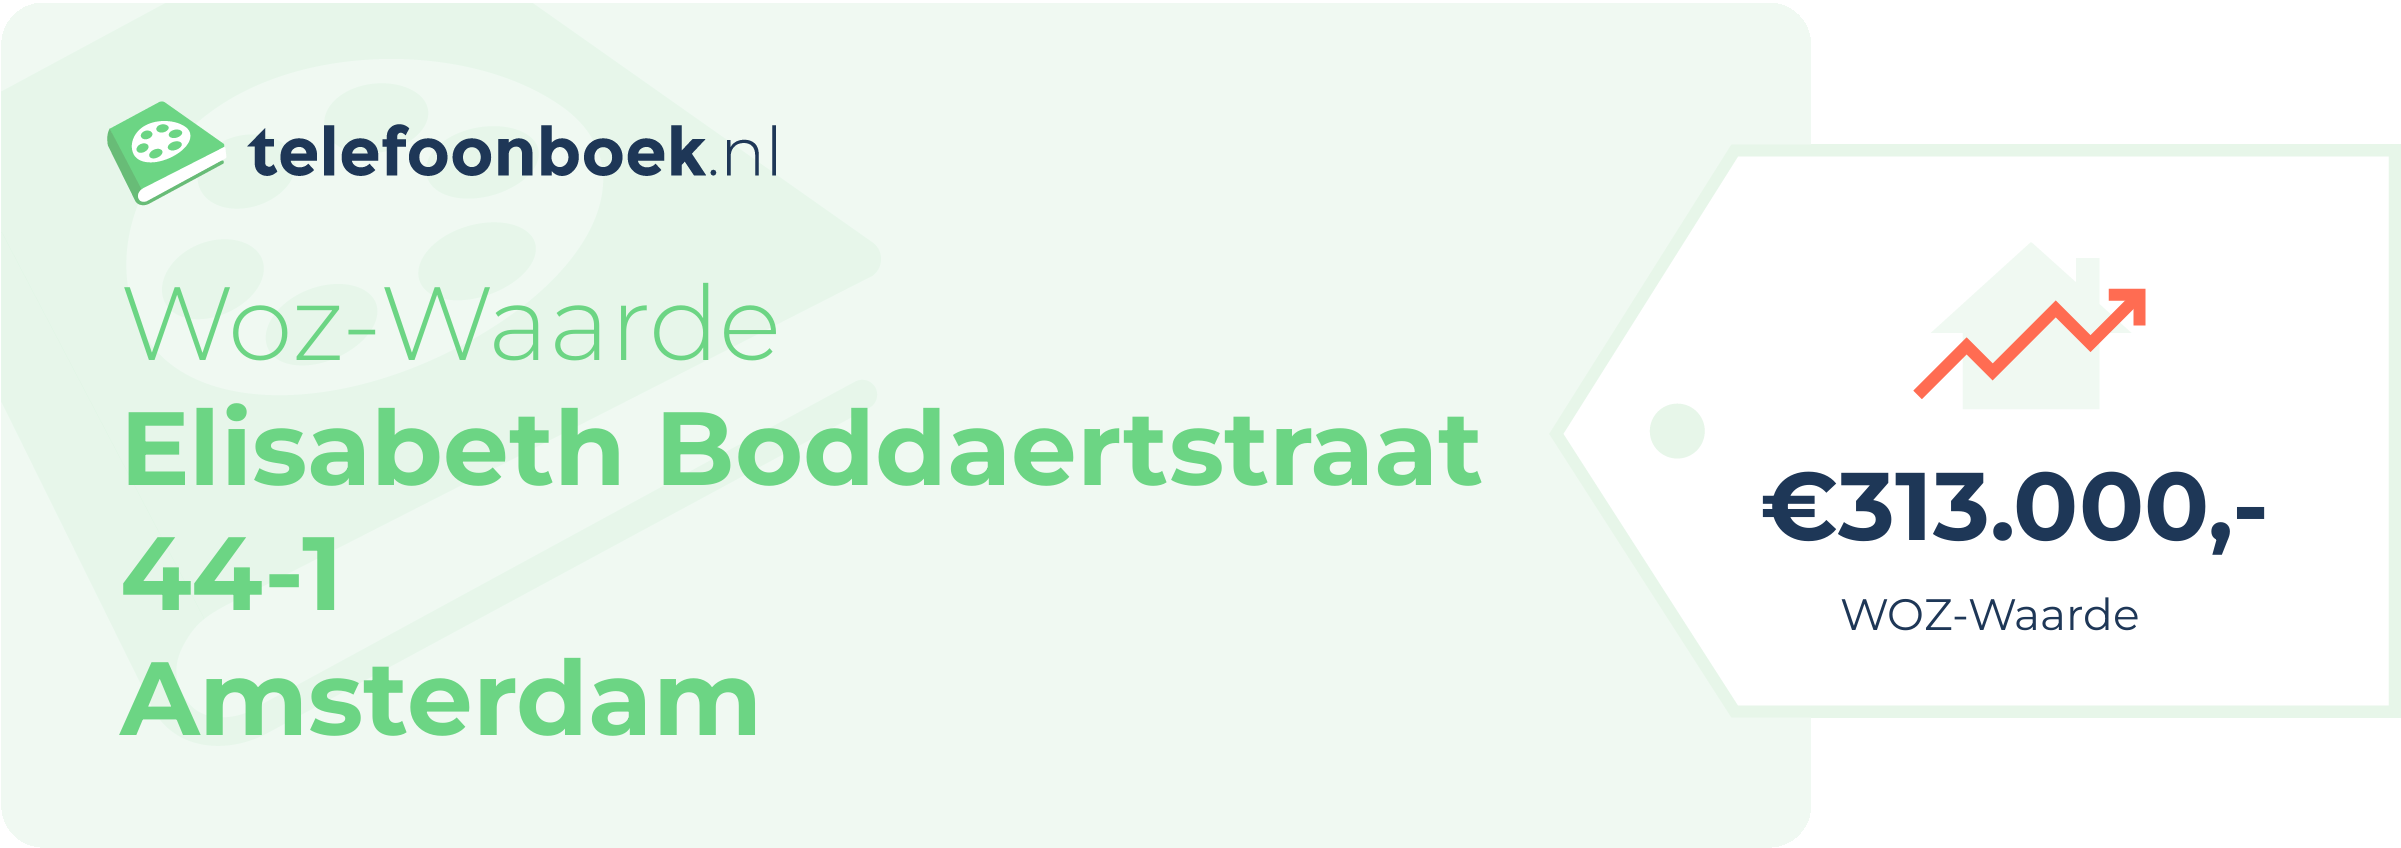 WOZ-waarde Elisabeth Boddaertstraat 44-1 Amsterdam